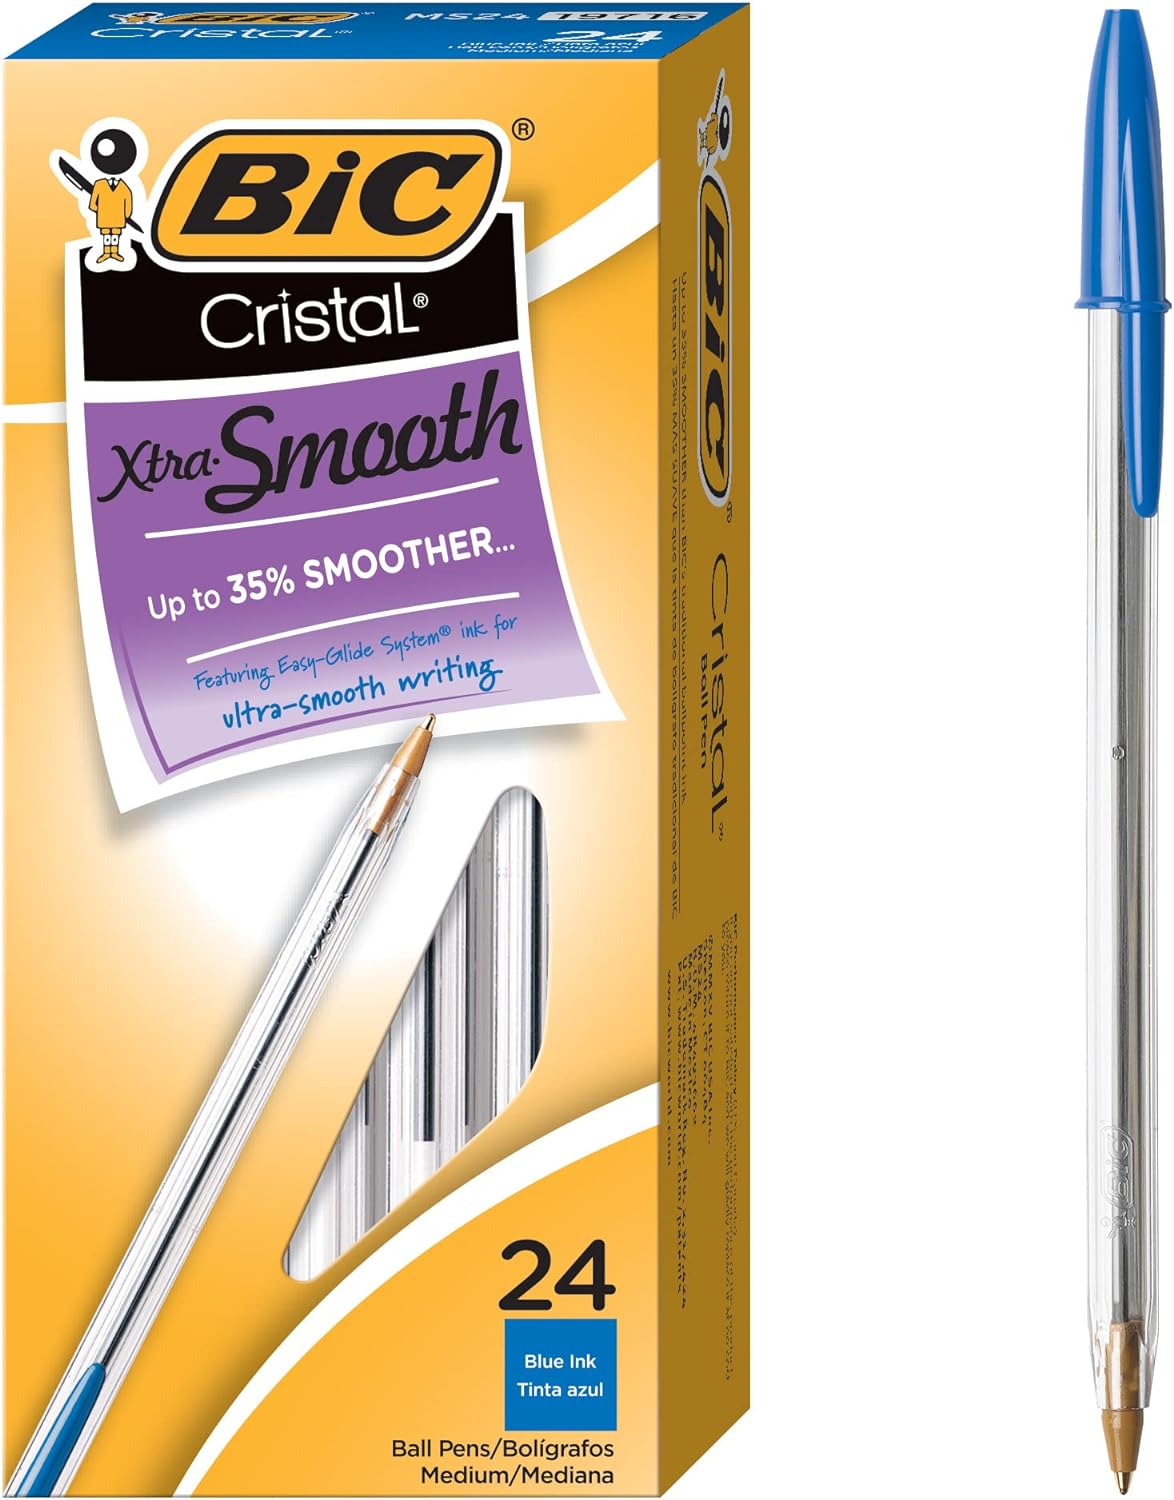 BIC Cristal Xtra Smooth Ballpoint Pen, Medium Point (1.0mm), Blue, 24-Count